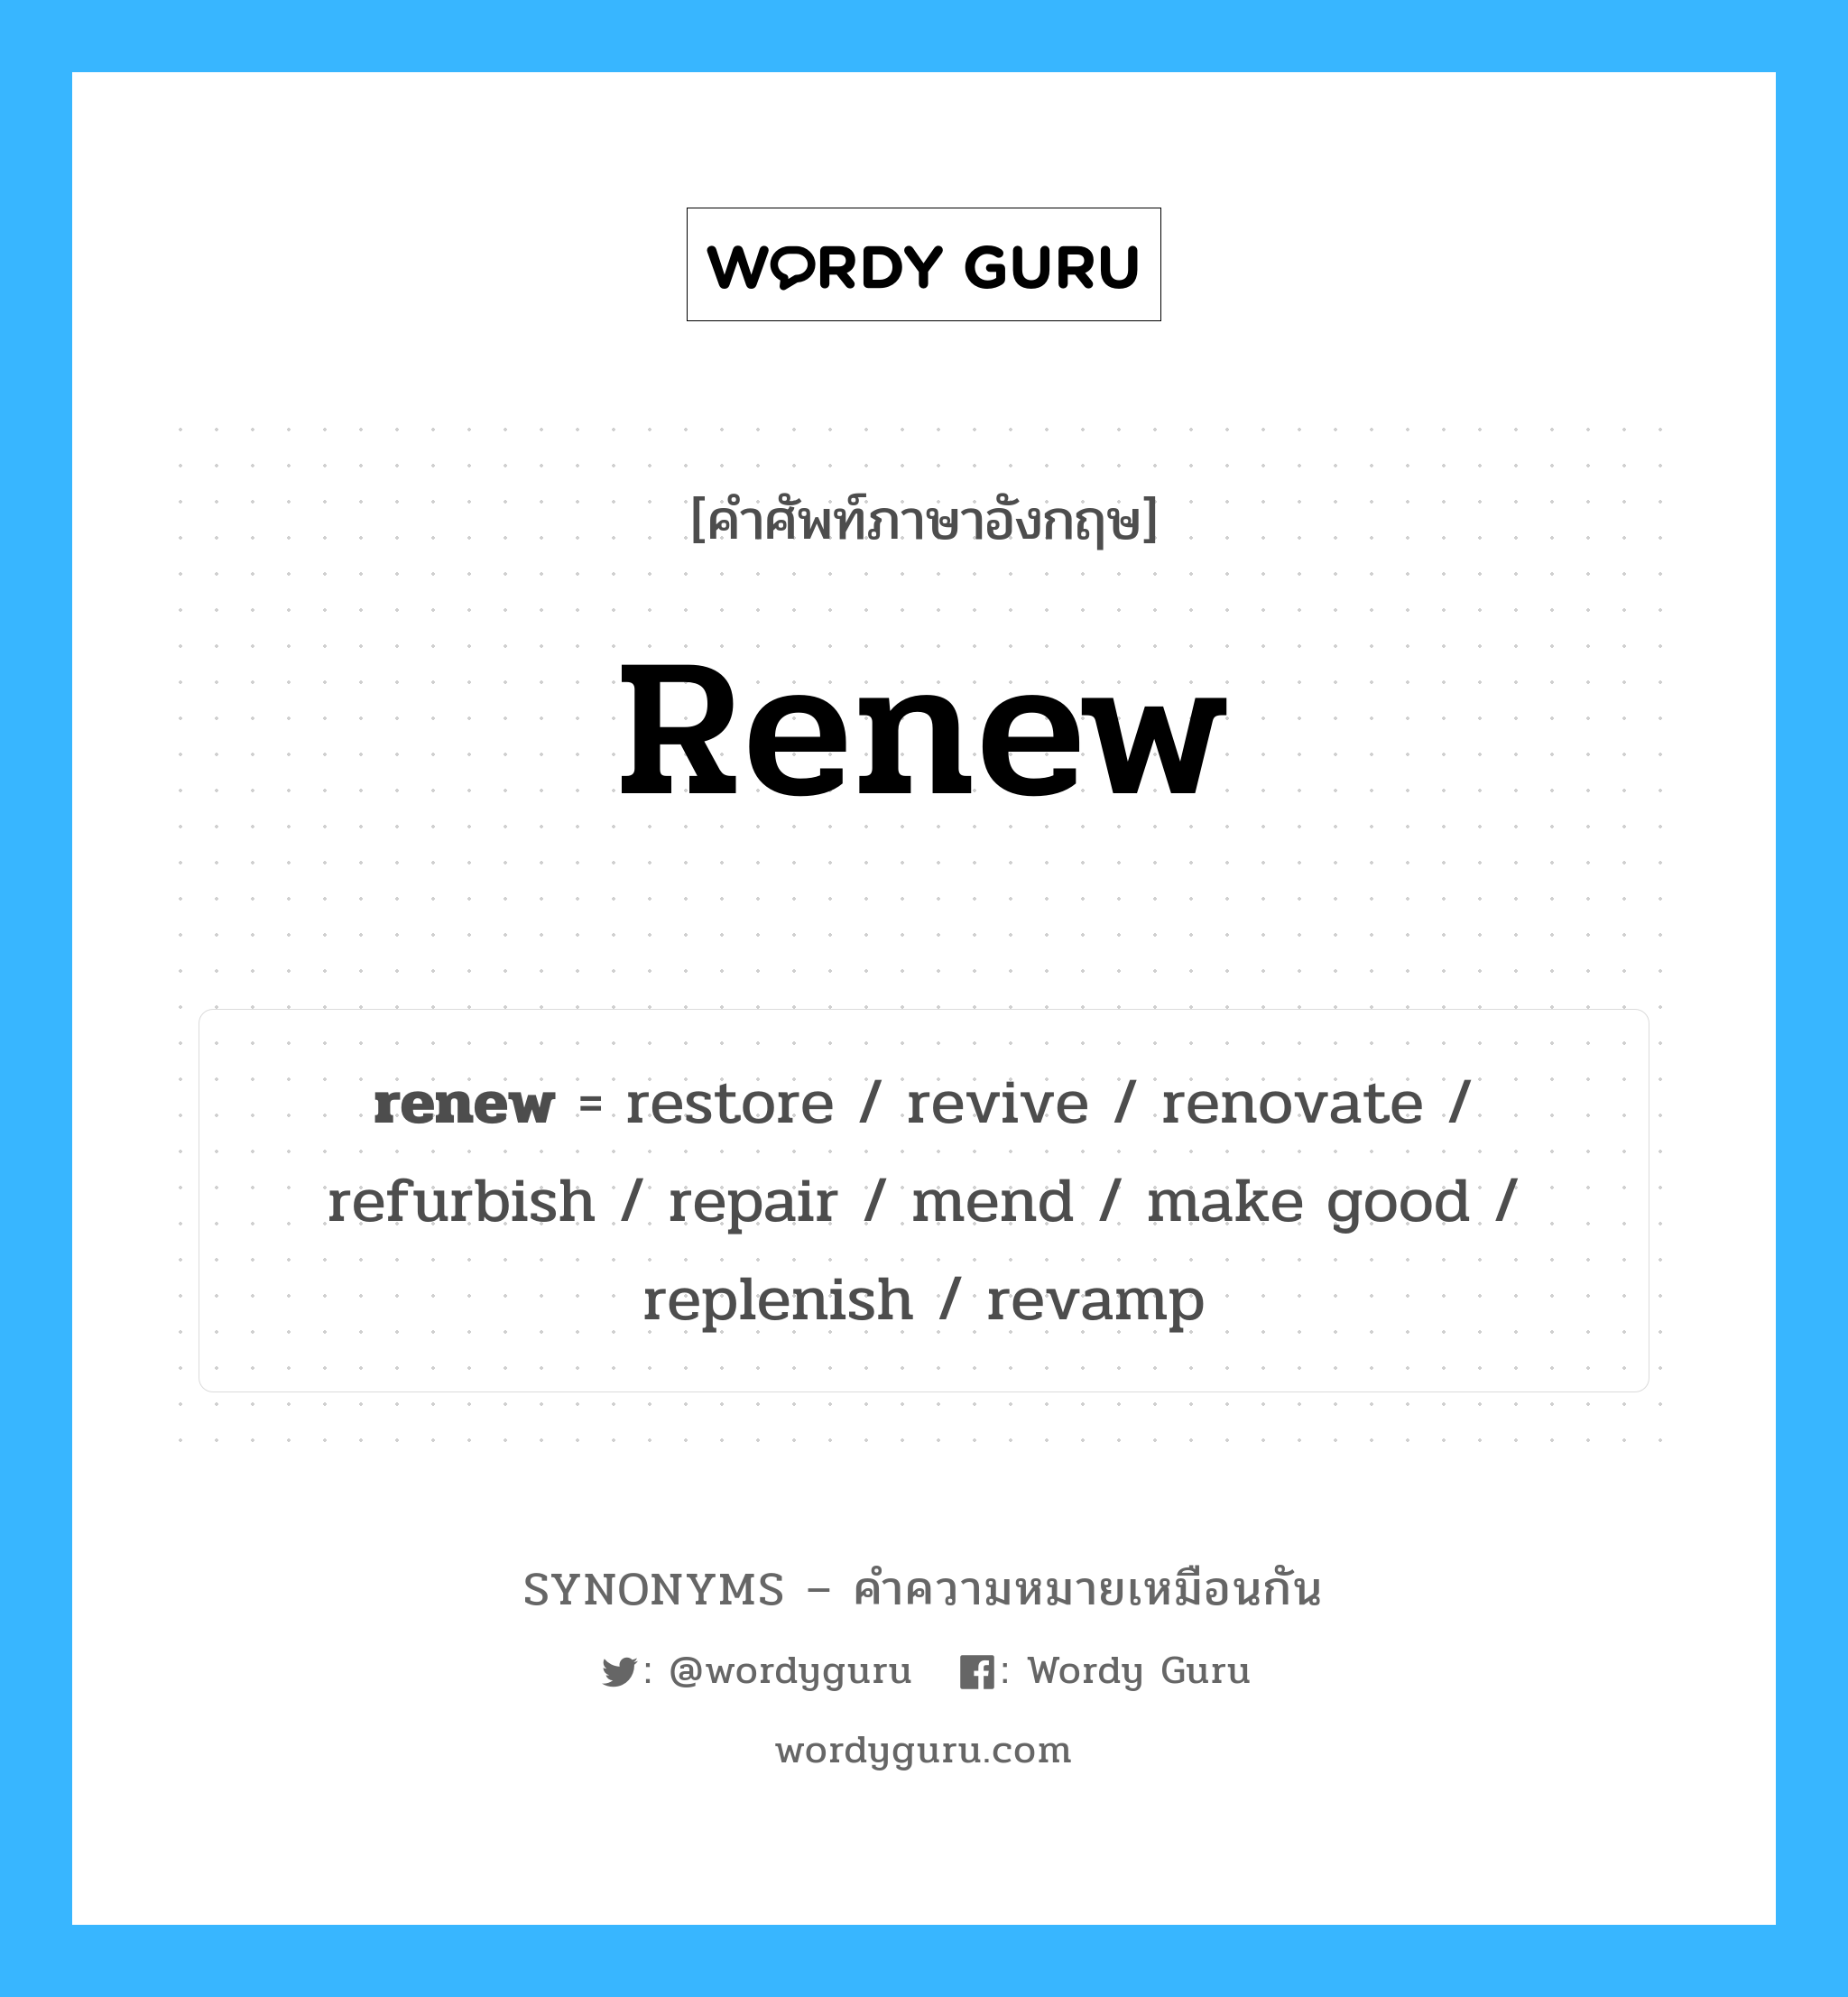 revive เป็นหนึ่งใน renew และมีคำอื่น ๆ อีกดังนี้, คำศัพท์ภาษาอังกฤษ revive ความหมายคล้ายกันกับ renew แปลว่า ฟื้น หมวด renew